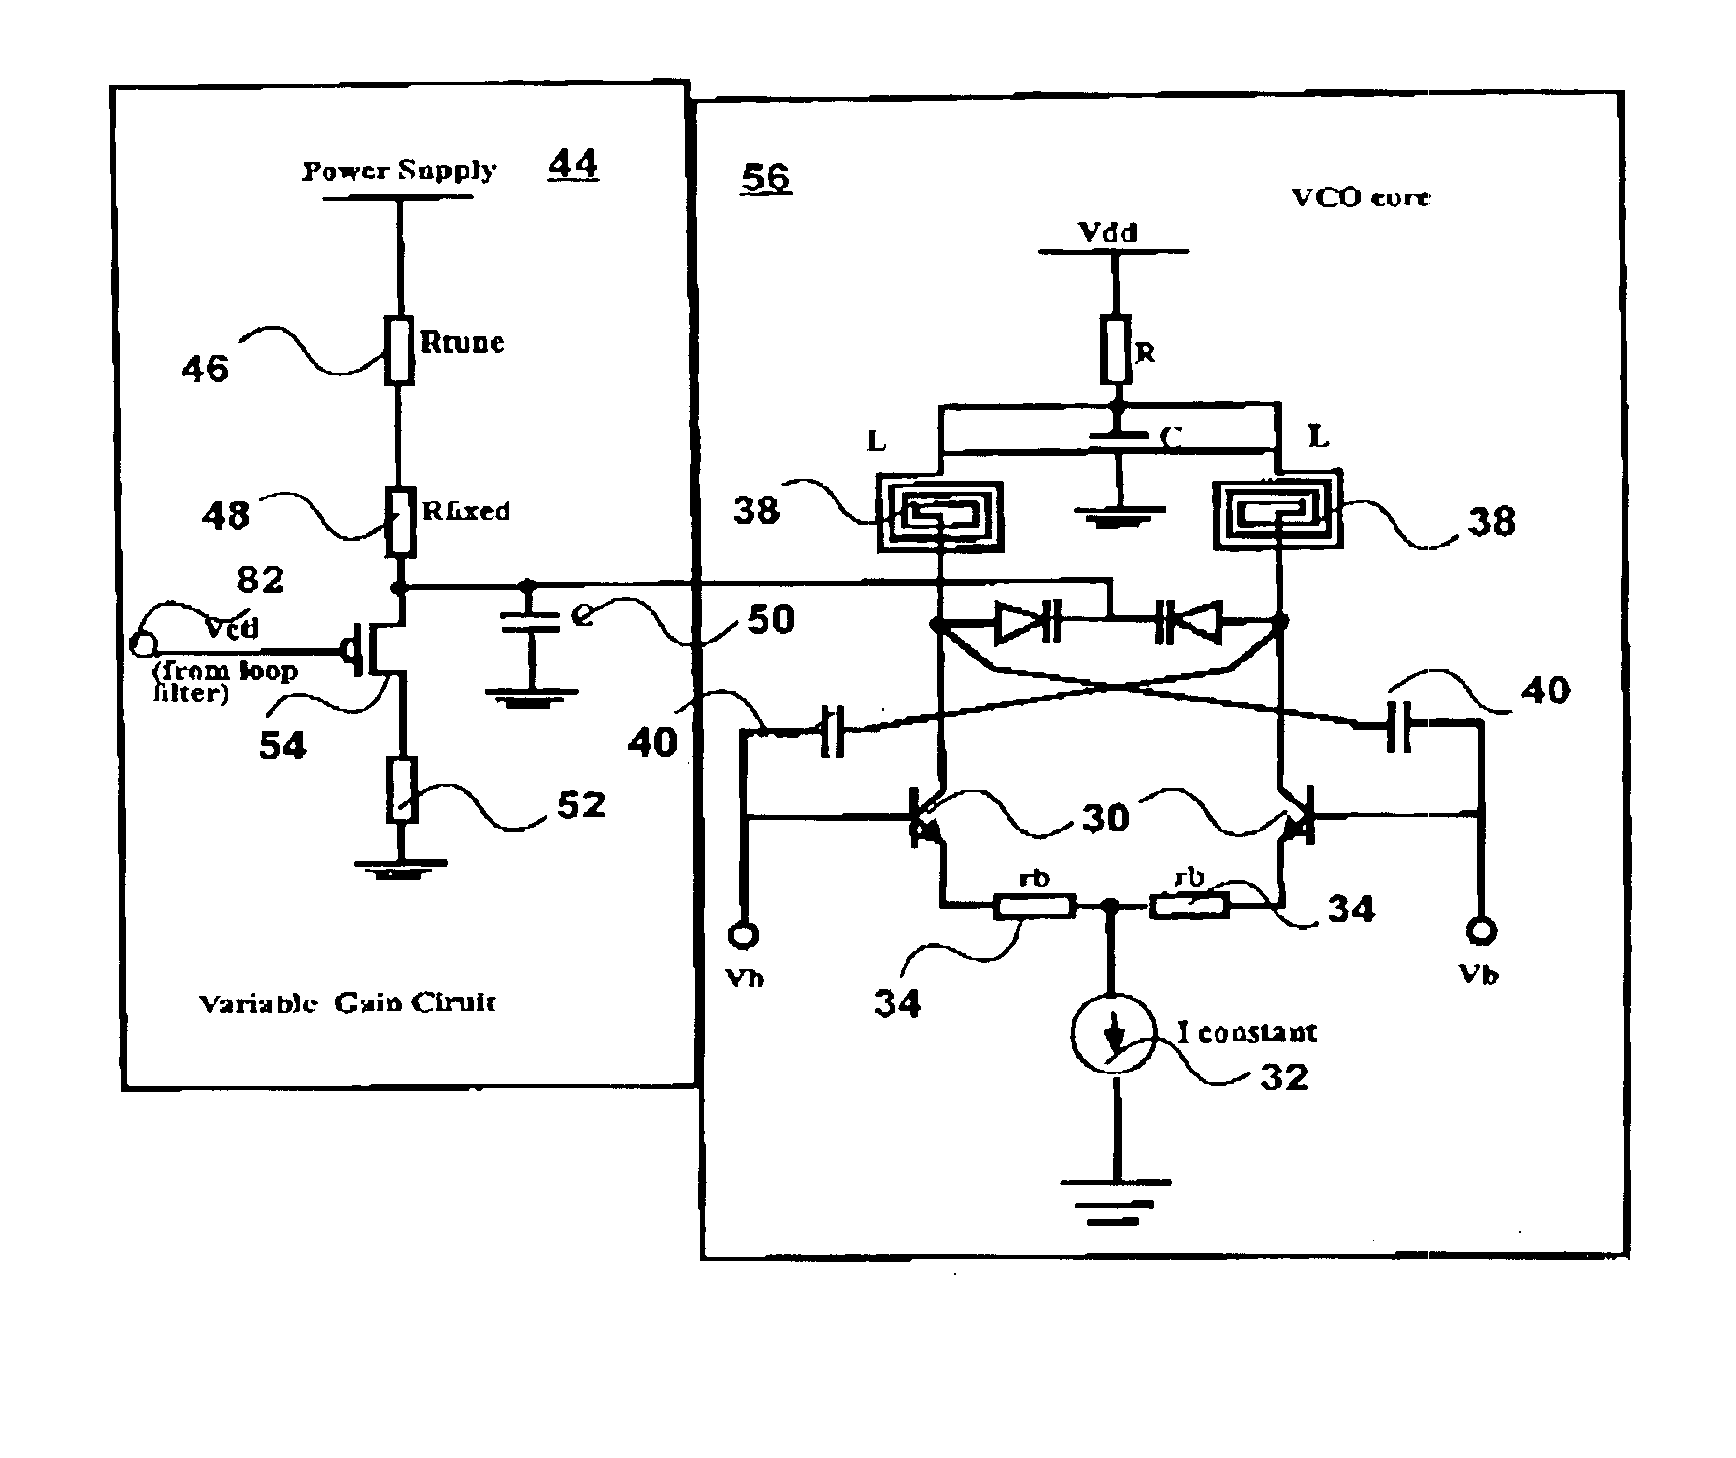 Capture range control mechanism for voltage controlled oscillators